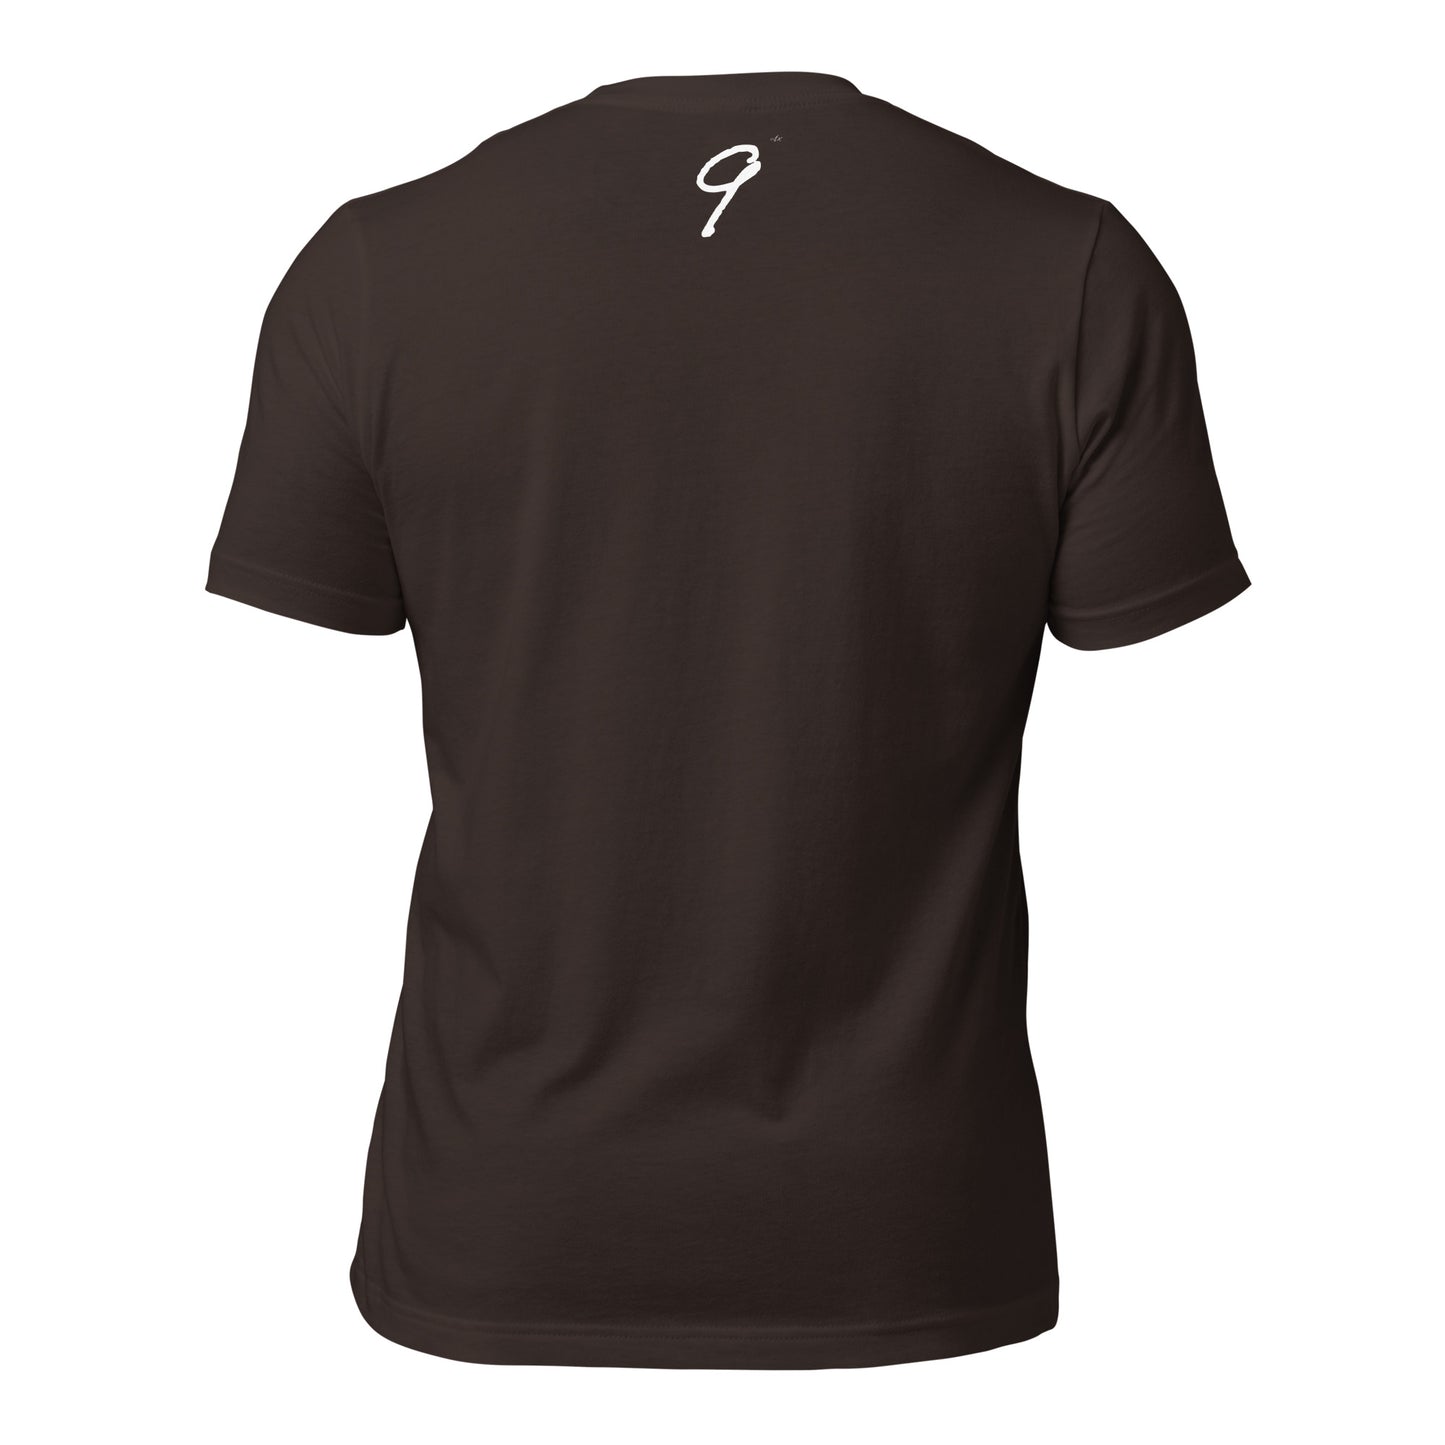 9 Numeral Unisex t-shirt